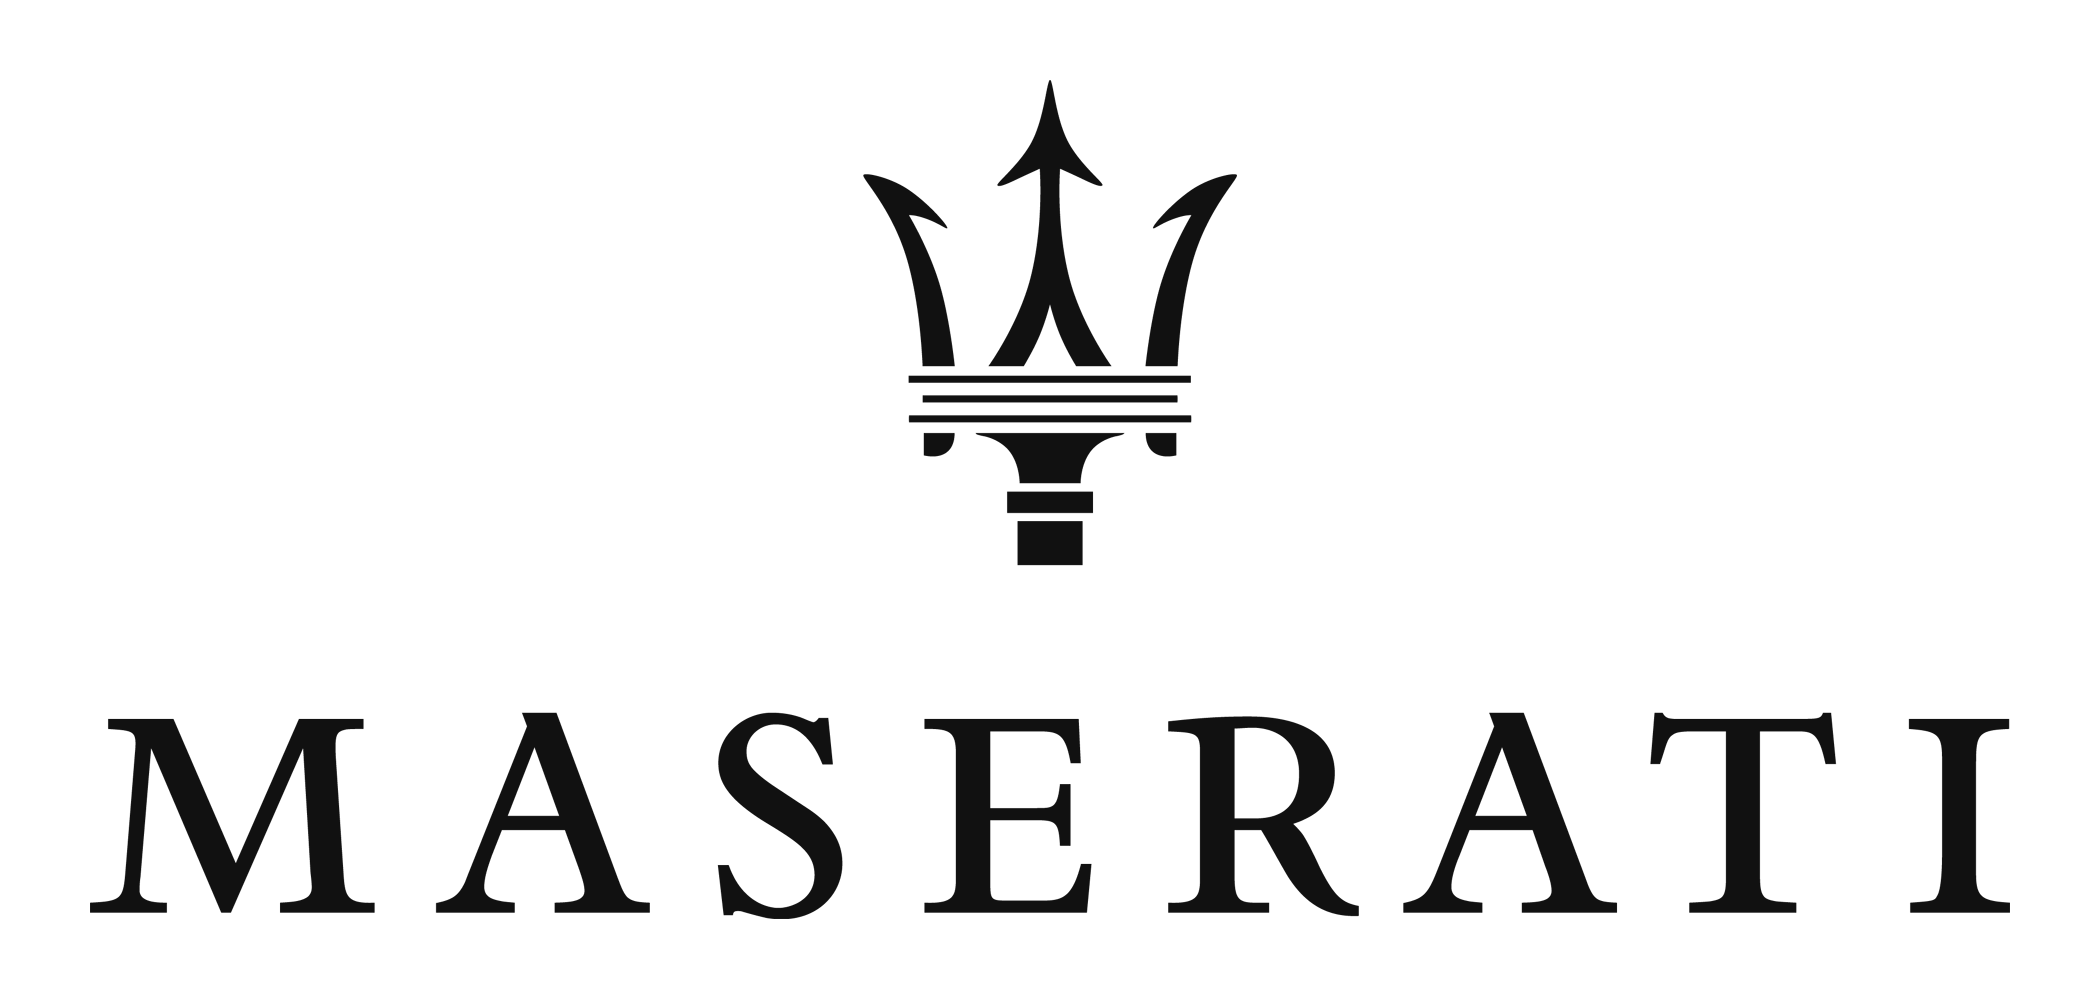 Maserati logo: origin of the Trident logo